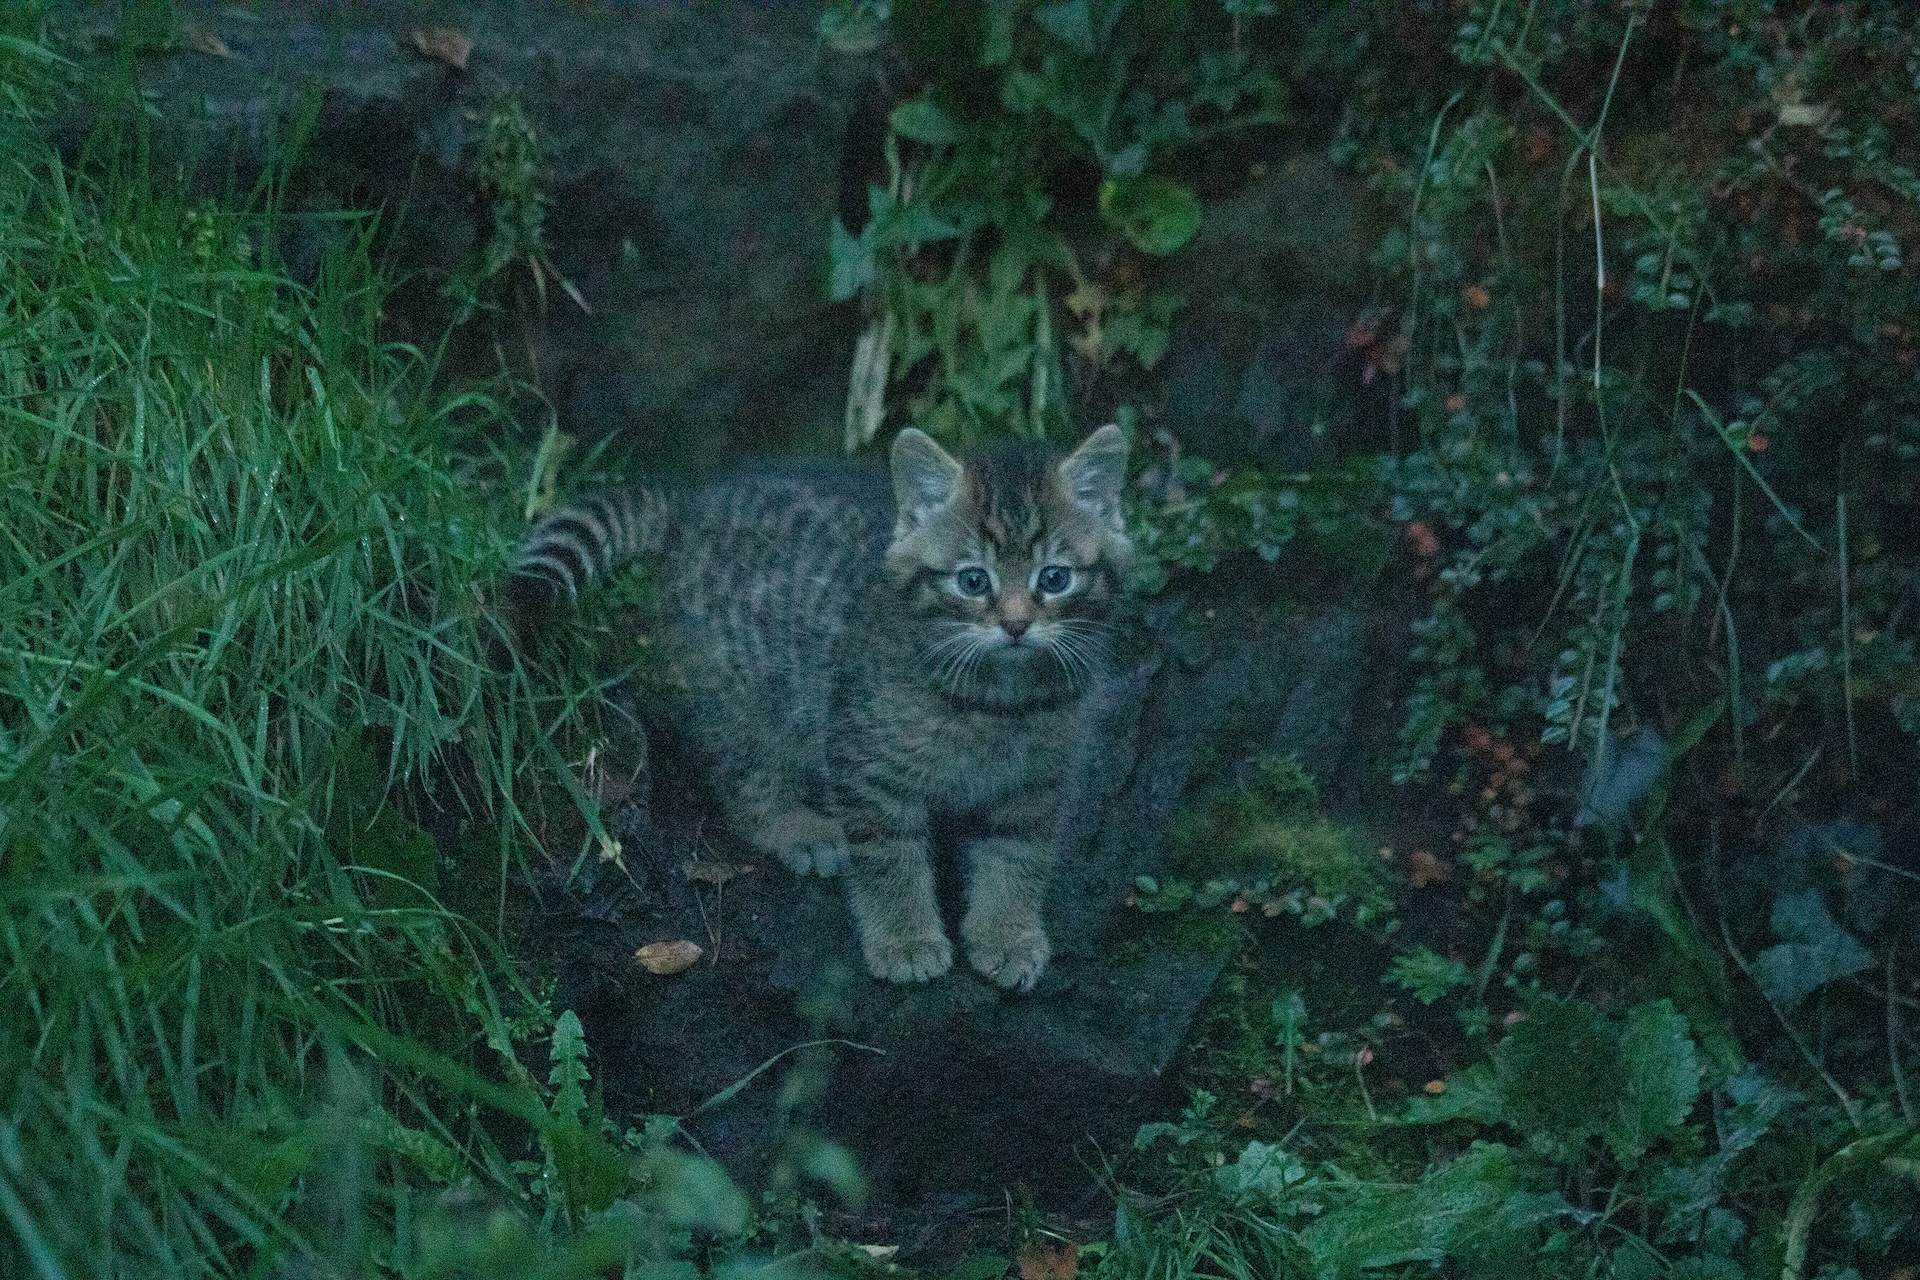 wildcat kitten in enclosure at Edinburgh Zoo looking toward camera

Image: LAURA MOORE 2020